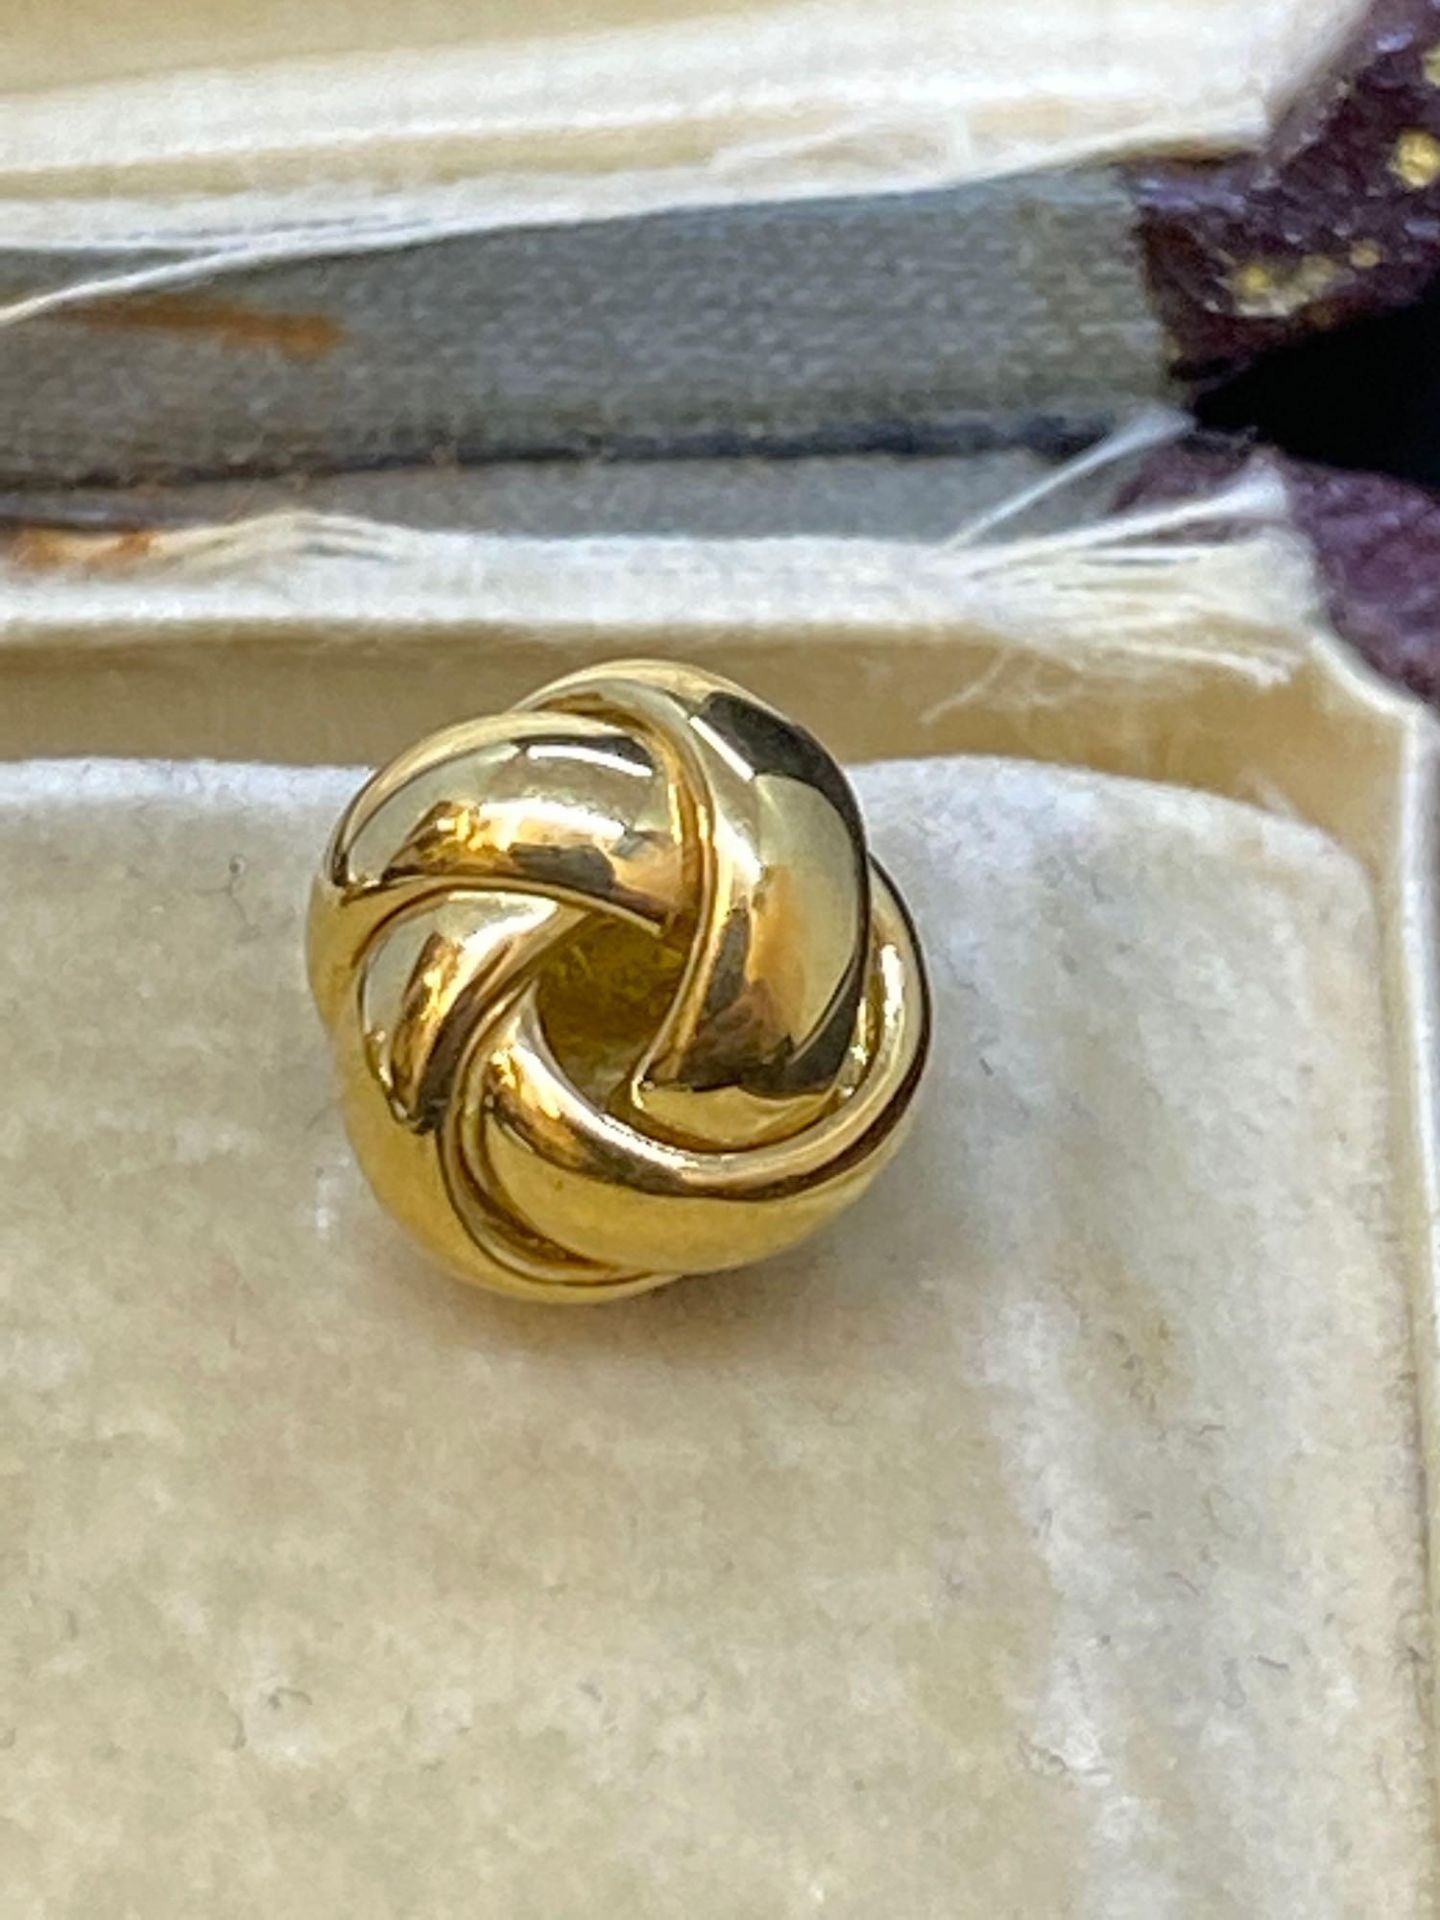 18ct Gold Knott Stud Earrings - 7 Grams - Image 2 of 3